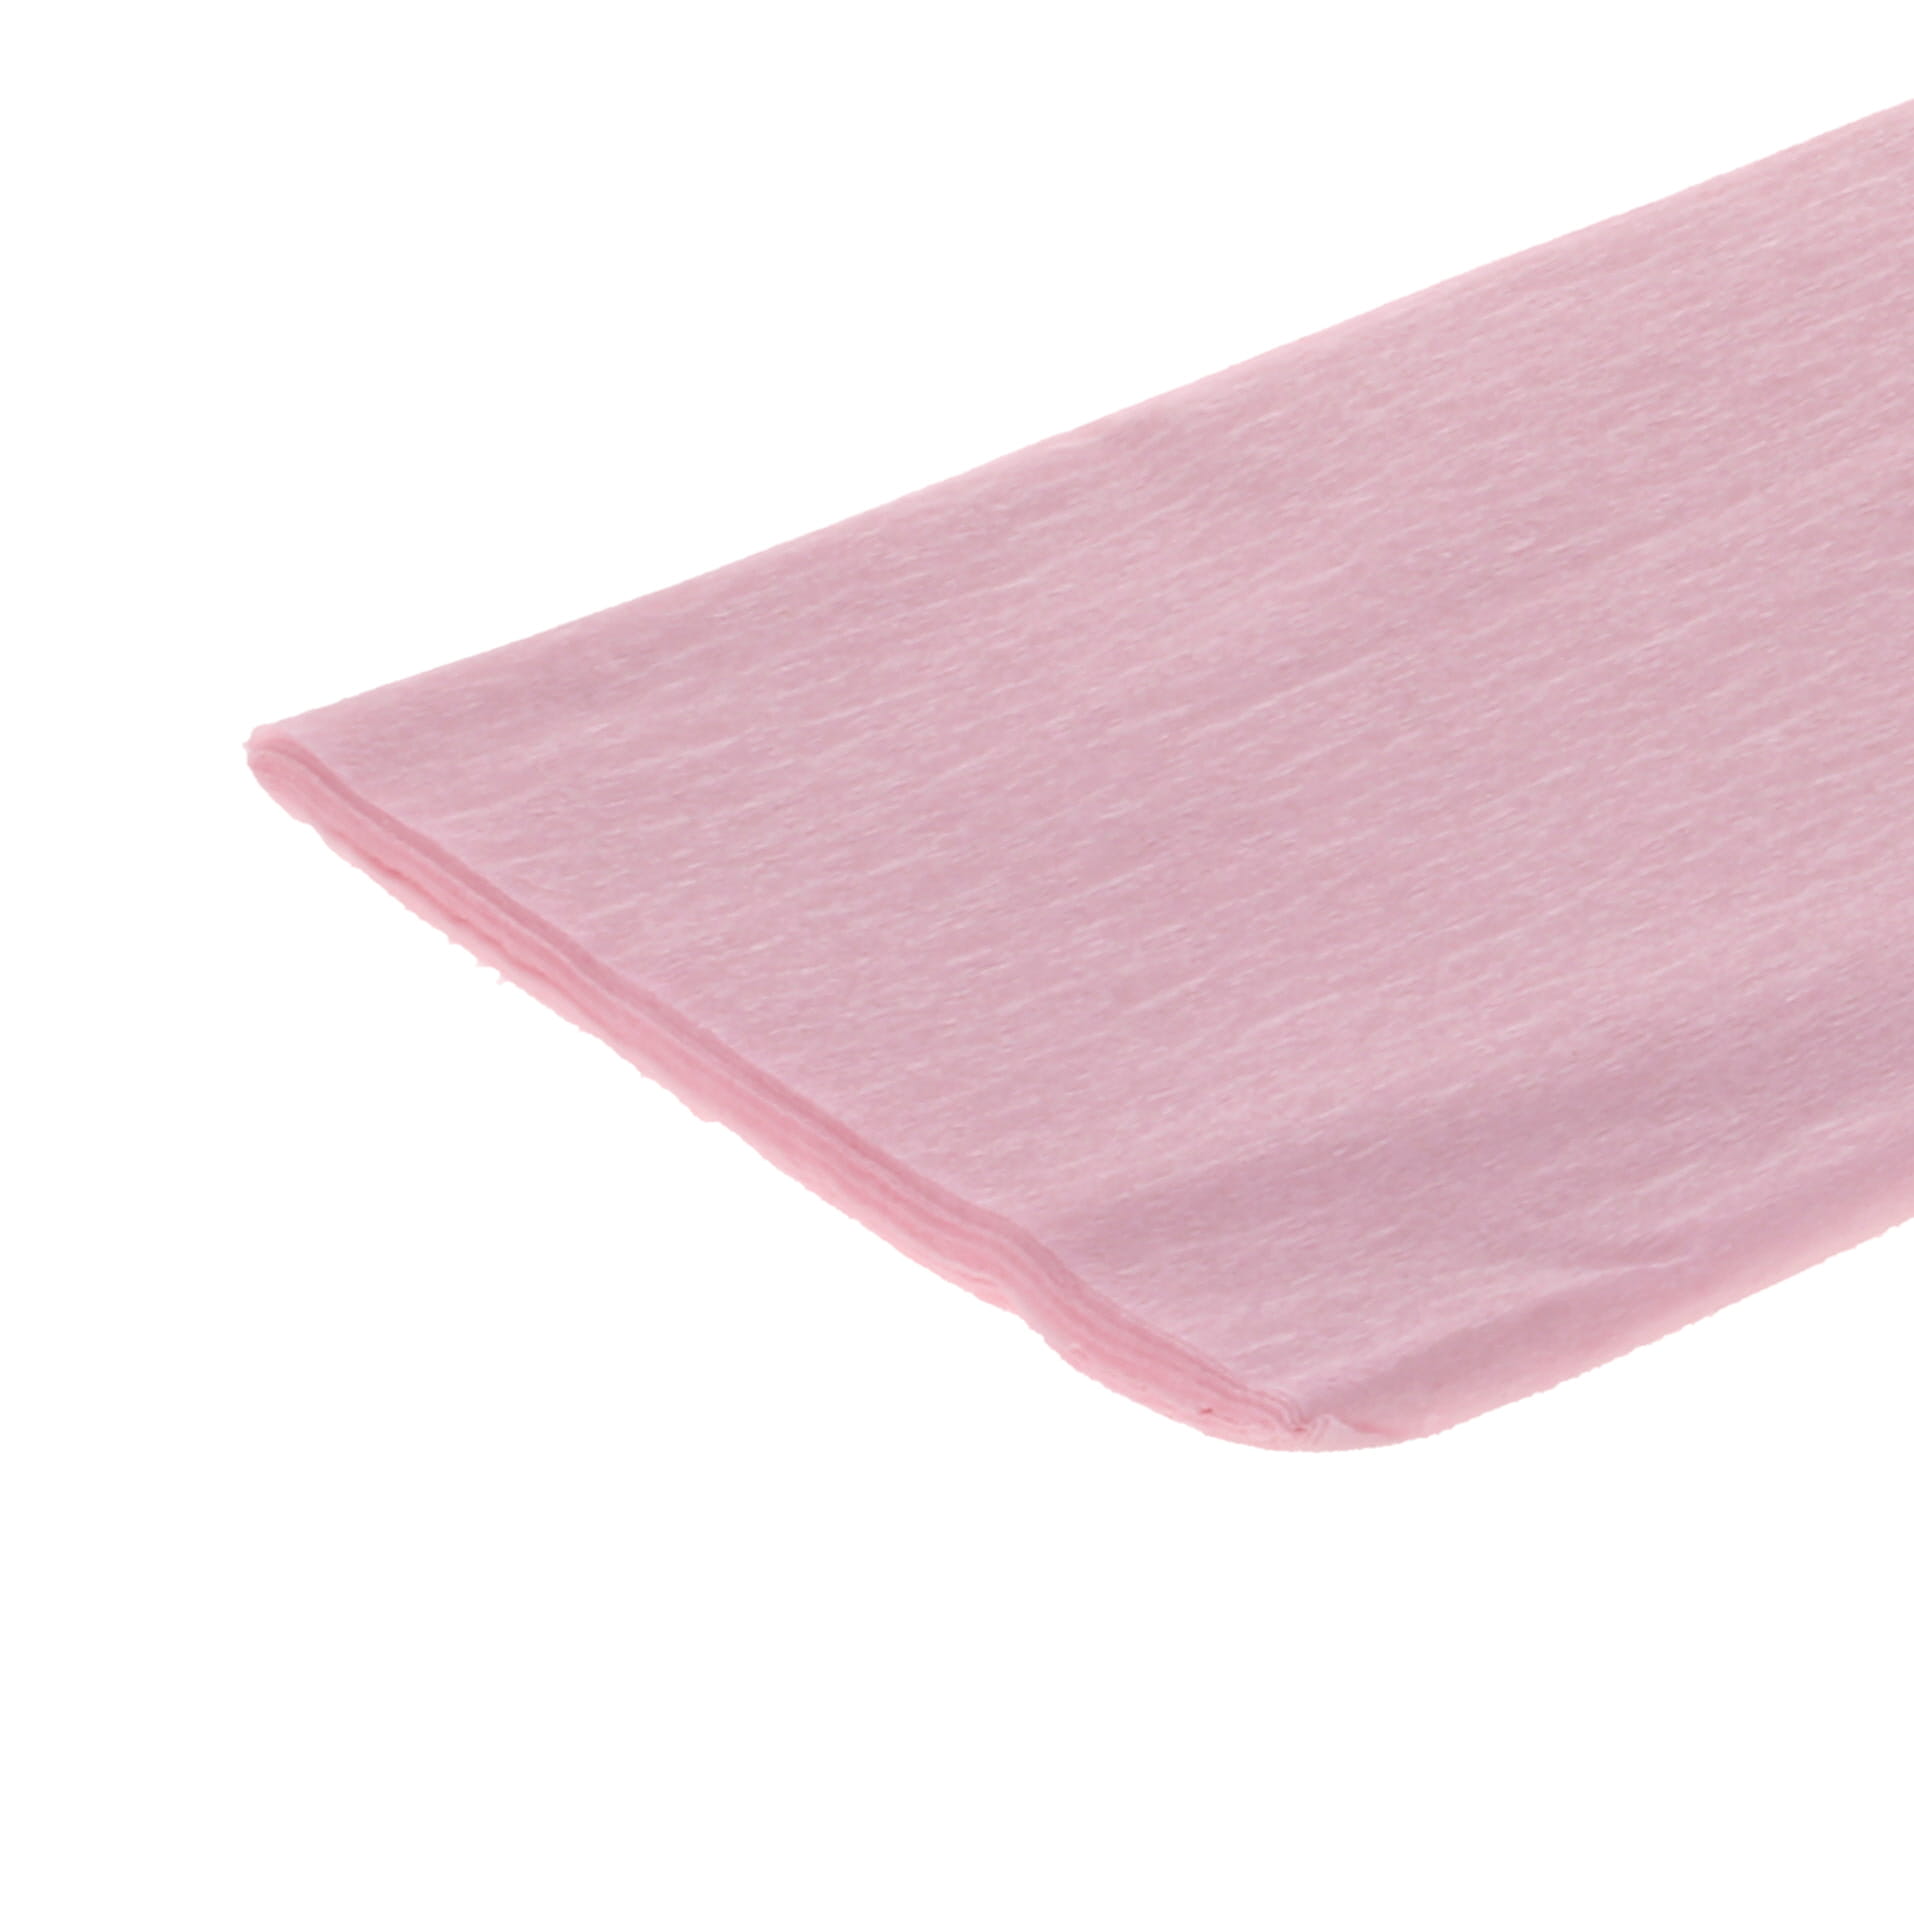 Crepe Paper Pink - 51cm x 3m - pack of 10